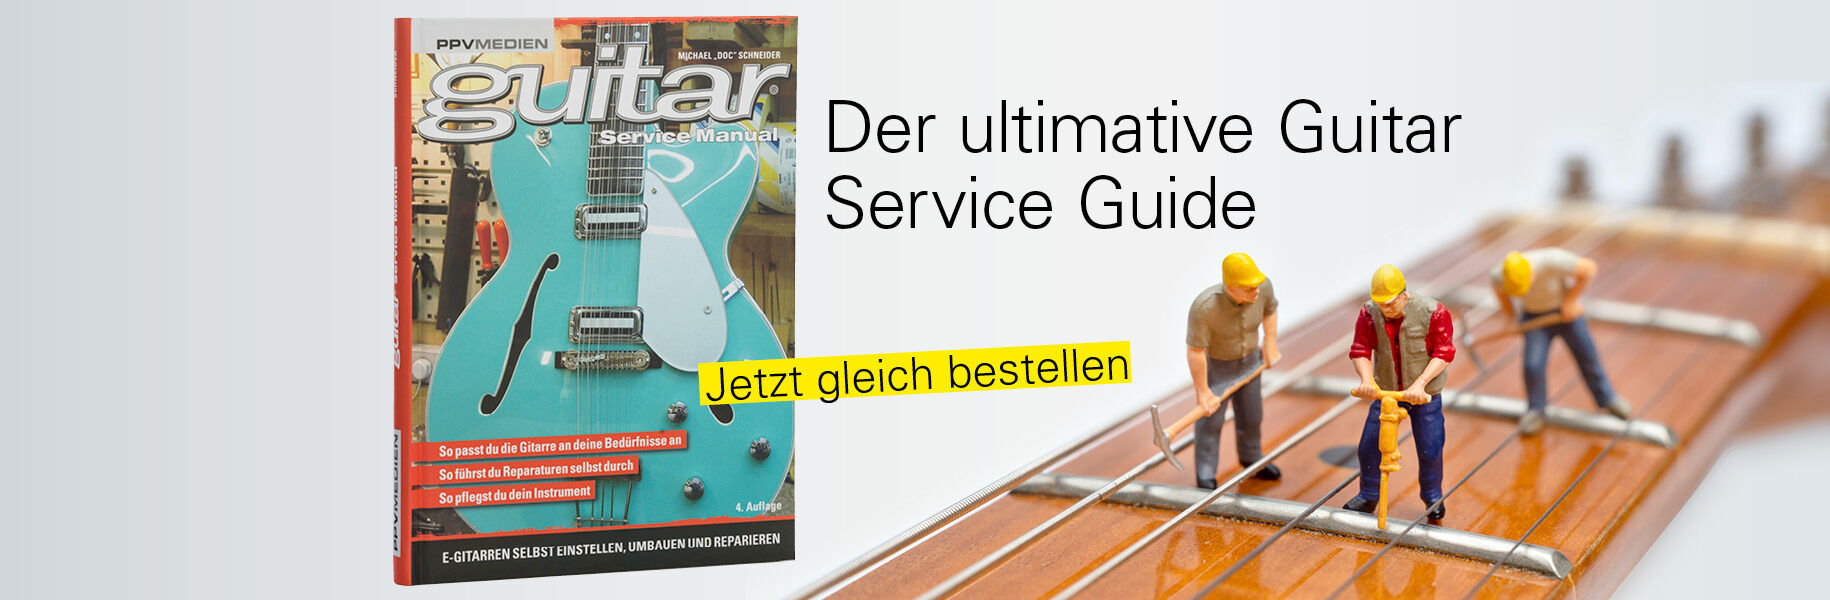 guitar ultimative Service guide